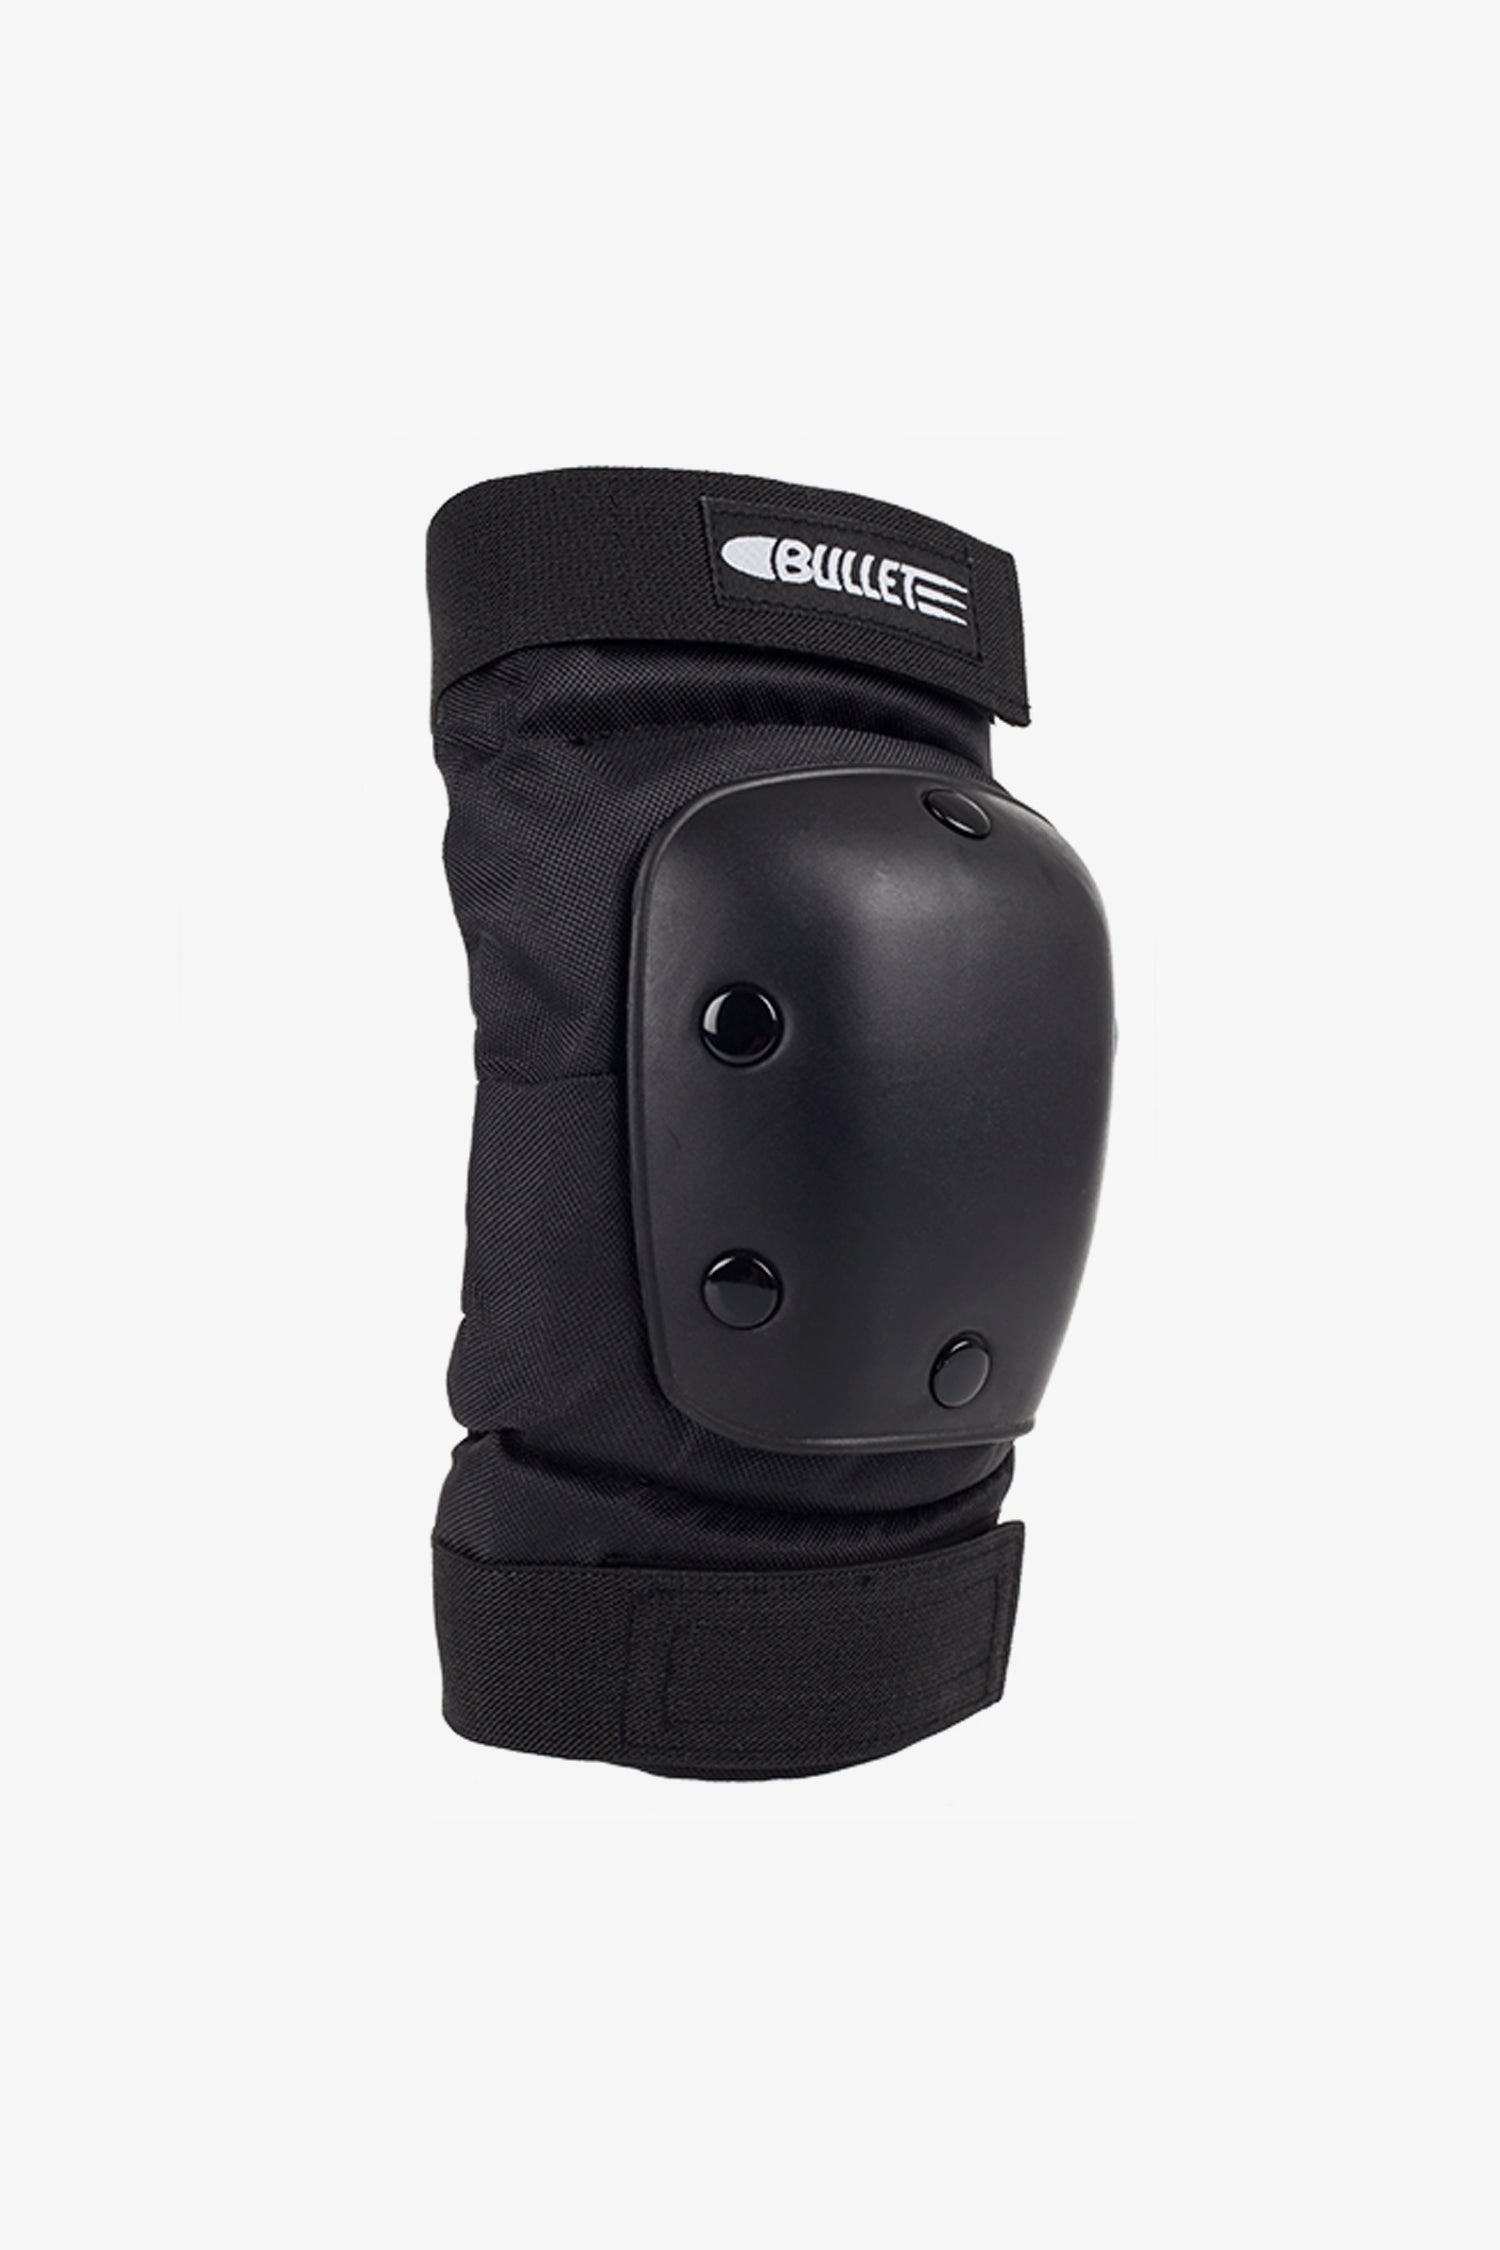 Selectshop FRAME - BULLET Elbow Pad Bullet Protective Gear Dubai